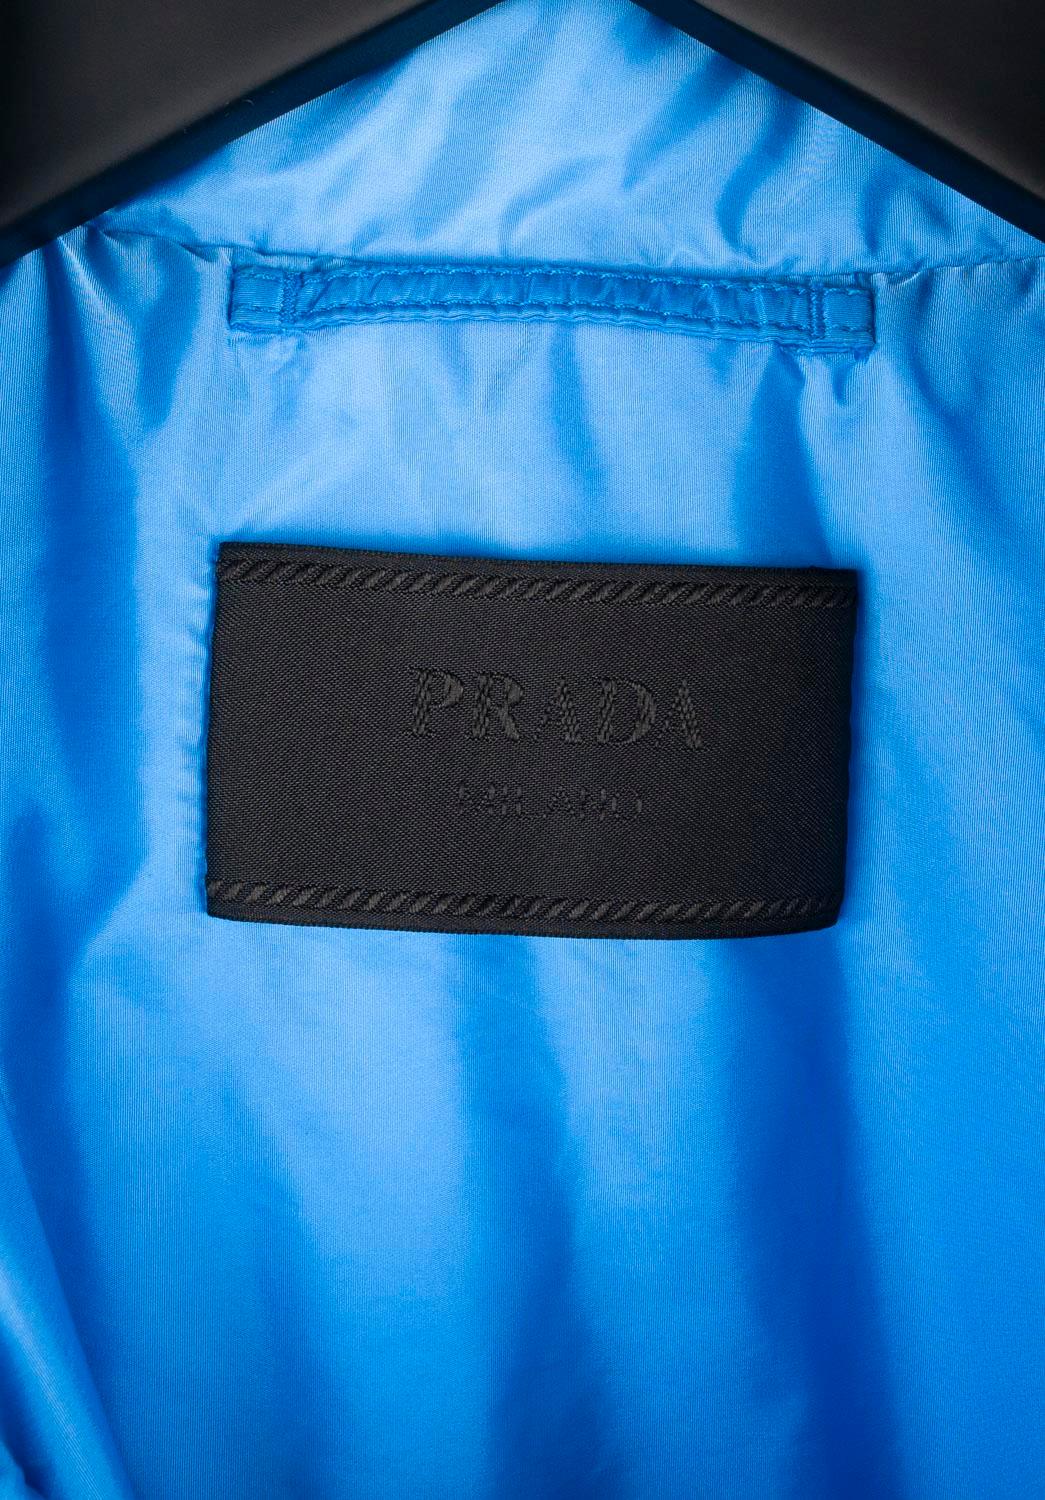 Prada Nylon blue jacket relaxed fit oversized Medium, S641  For Sale 2